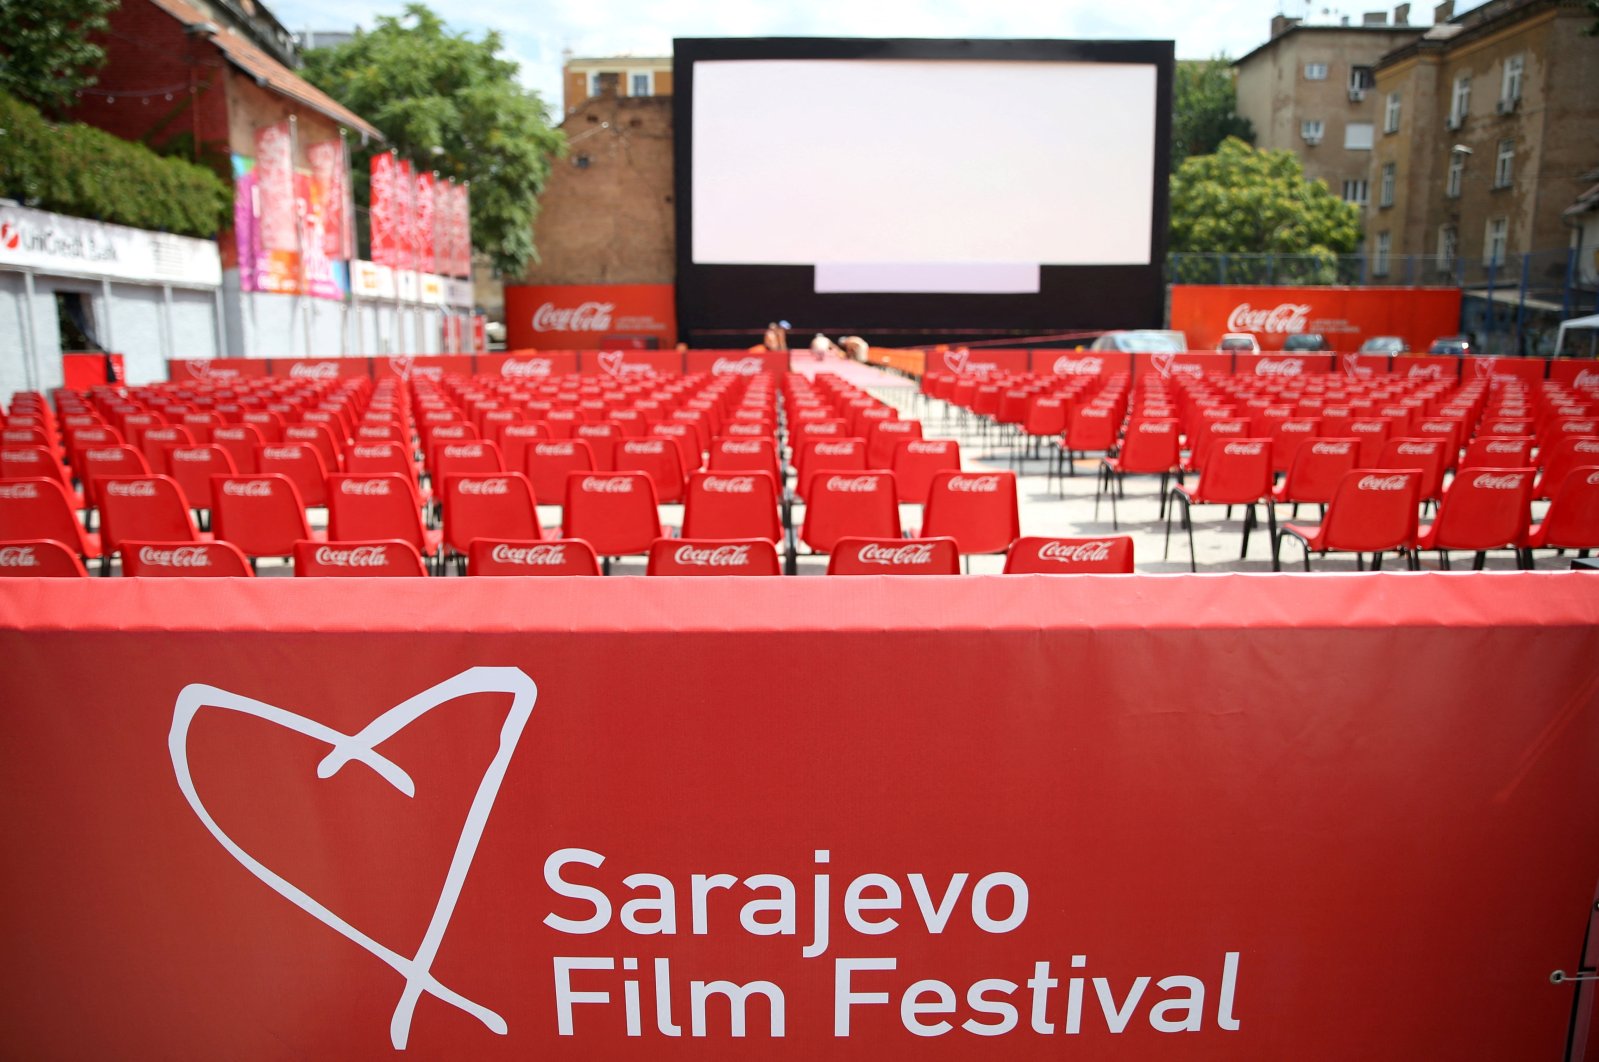 The Sarajevo Film Festival logo is pictured at the Open Air Cinema in Sarajevo, Bosnia-Herzegovina, Aug. 9, 2021. (Reuters Photo)